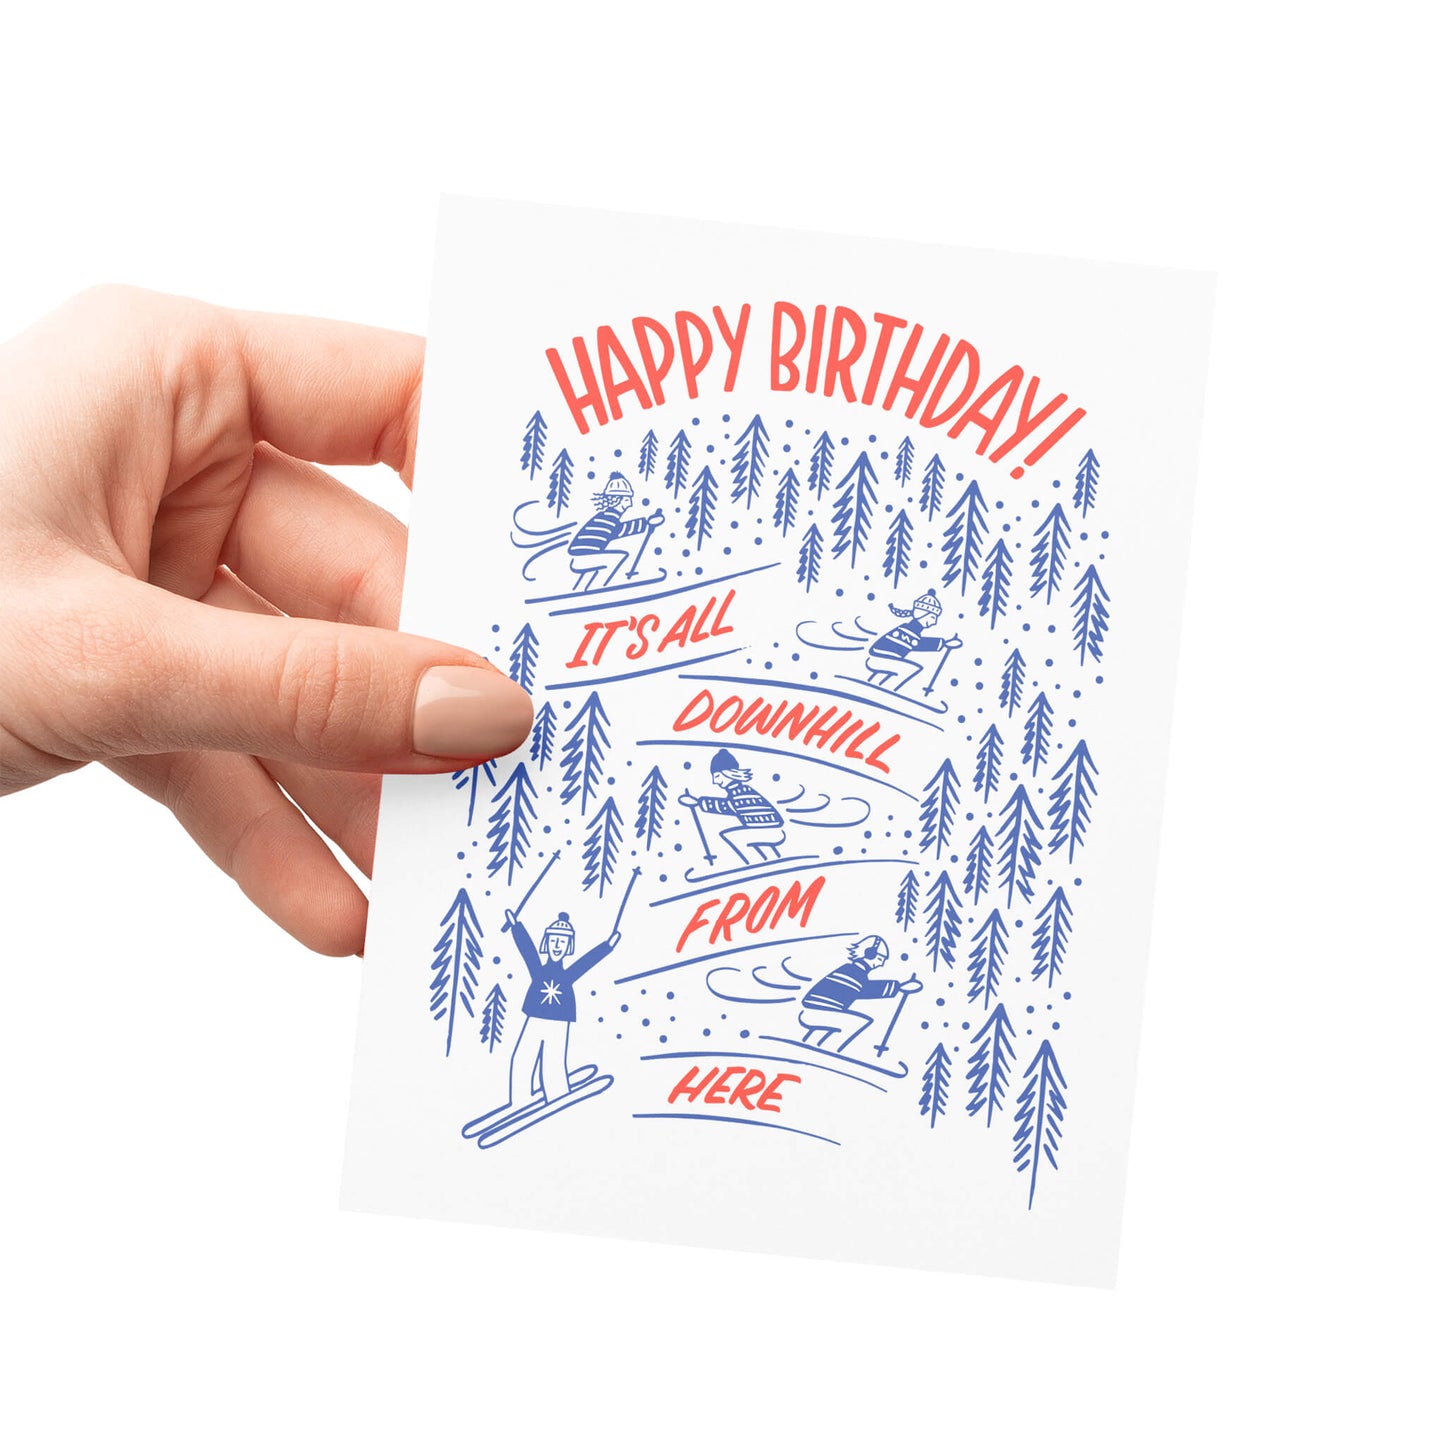 Downhill Birthday Letterpress Card